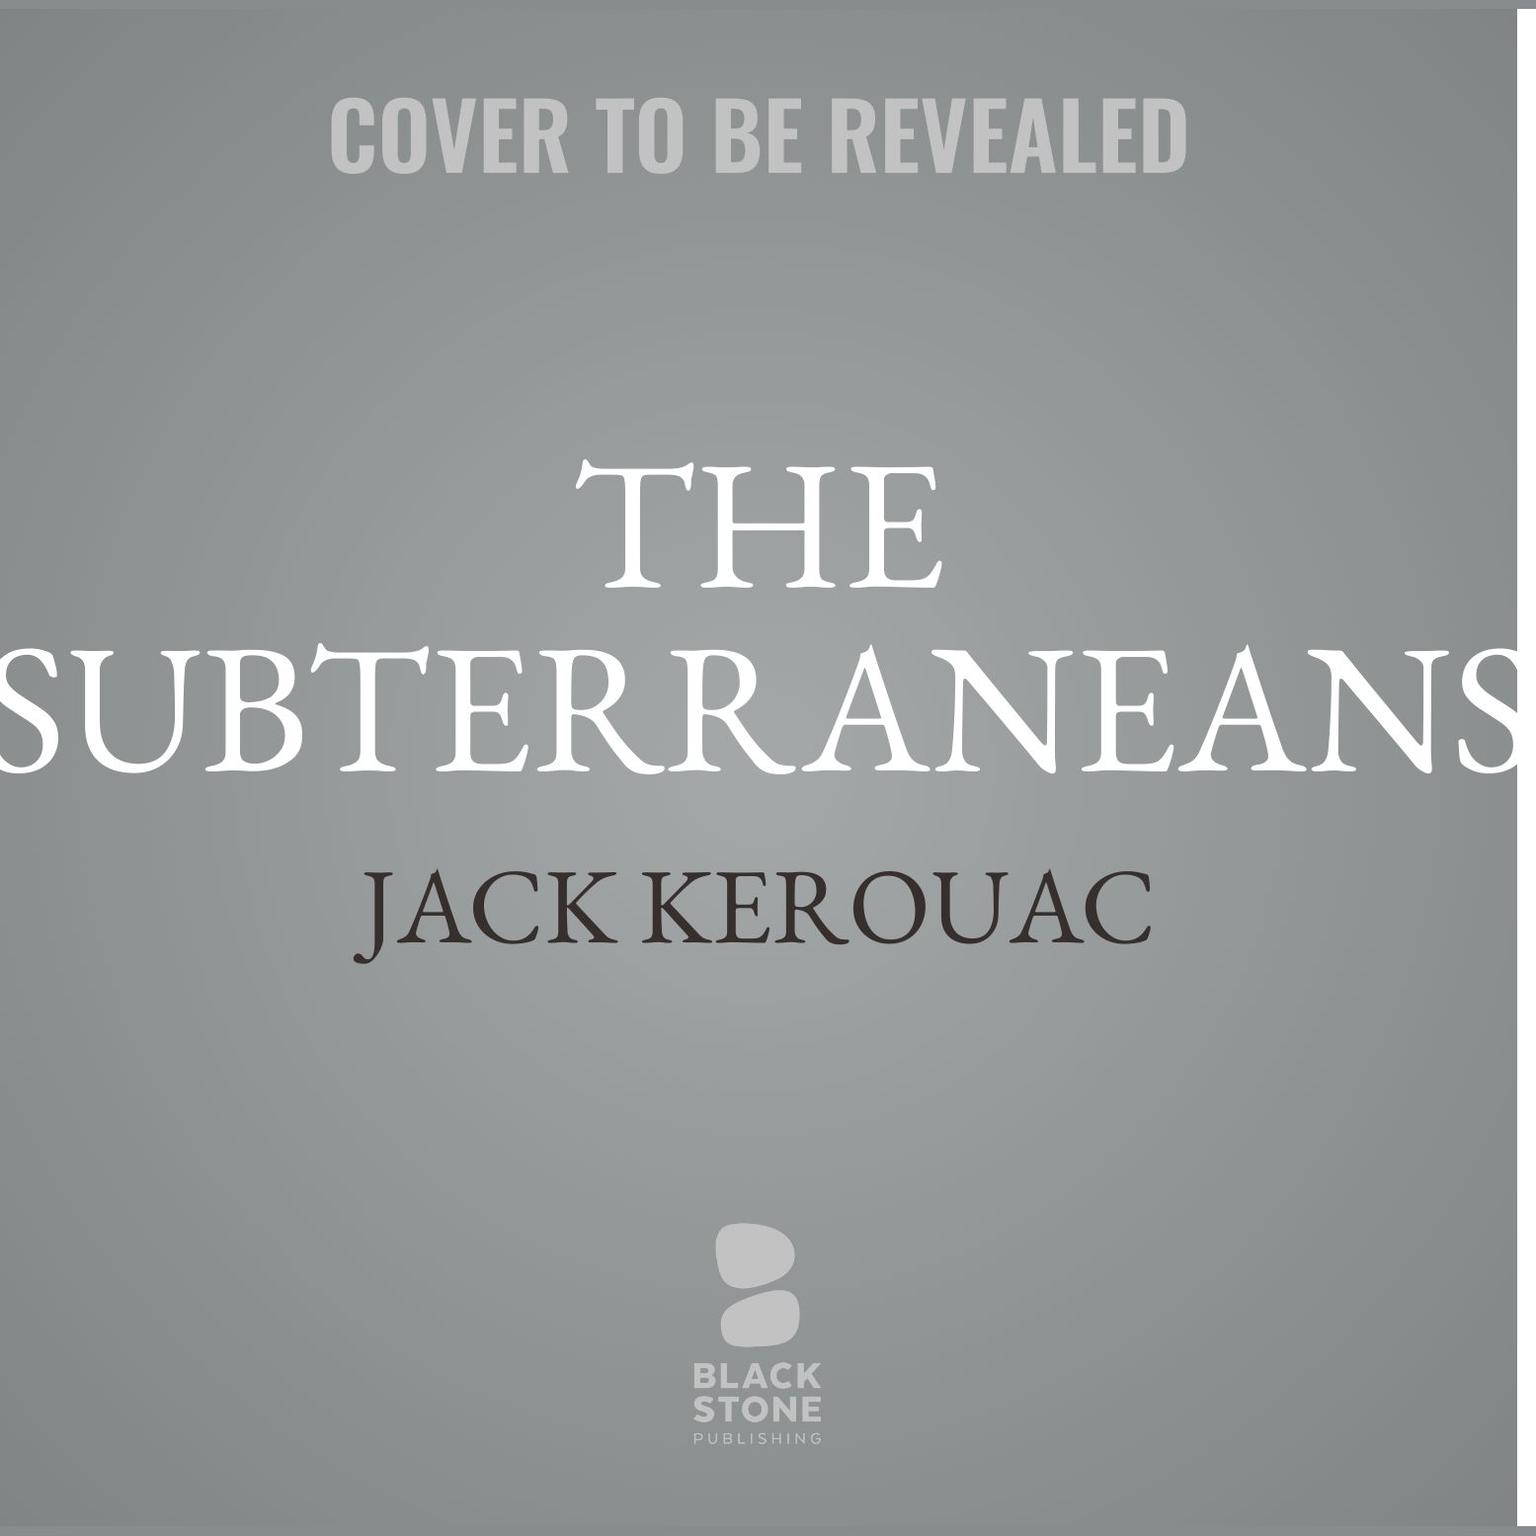 The Subterraneans Audiobook, by Jack Kerouac